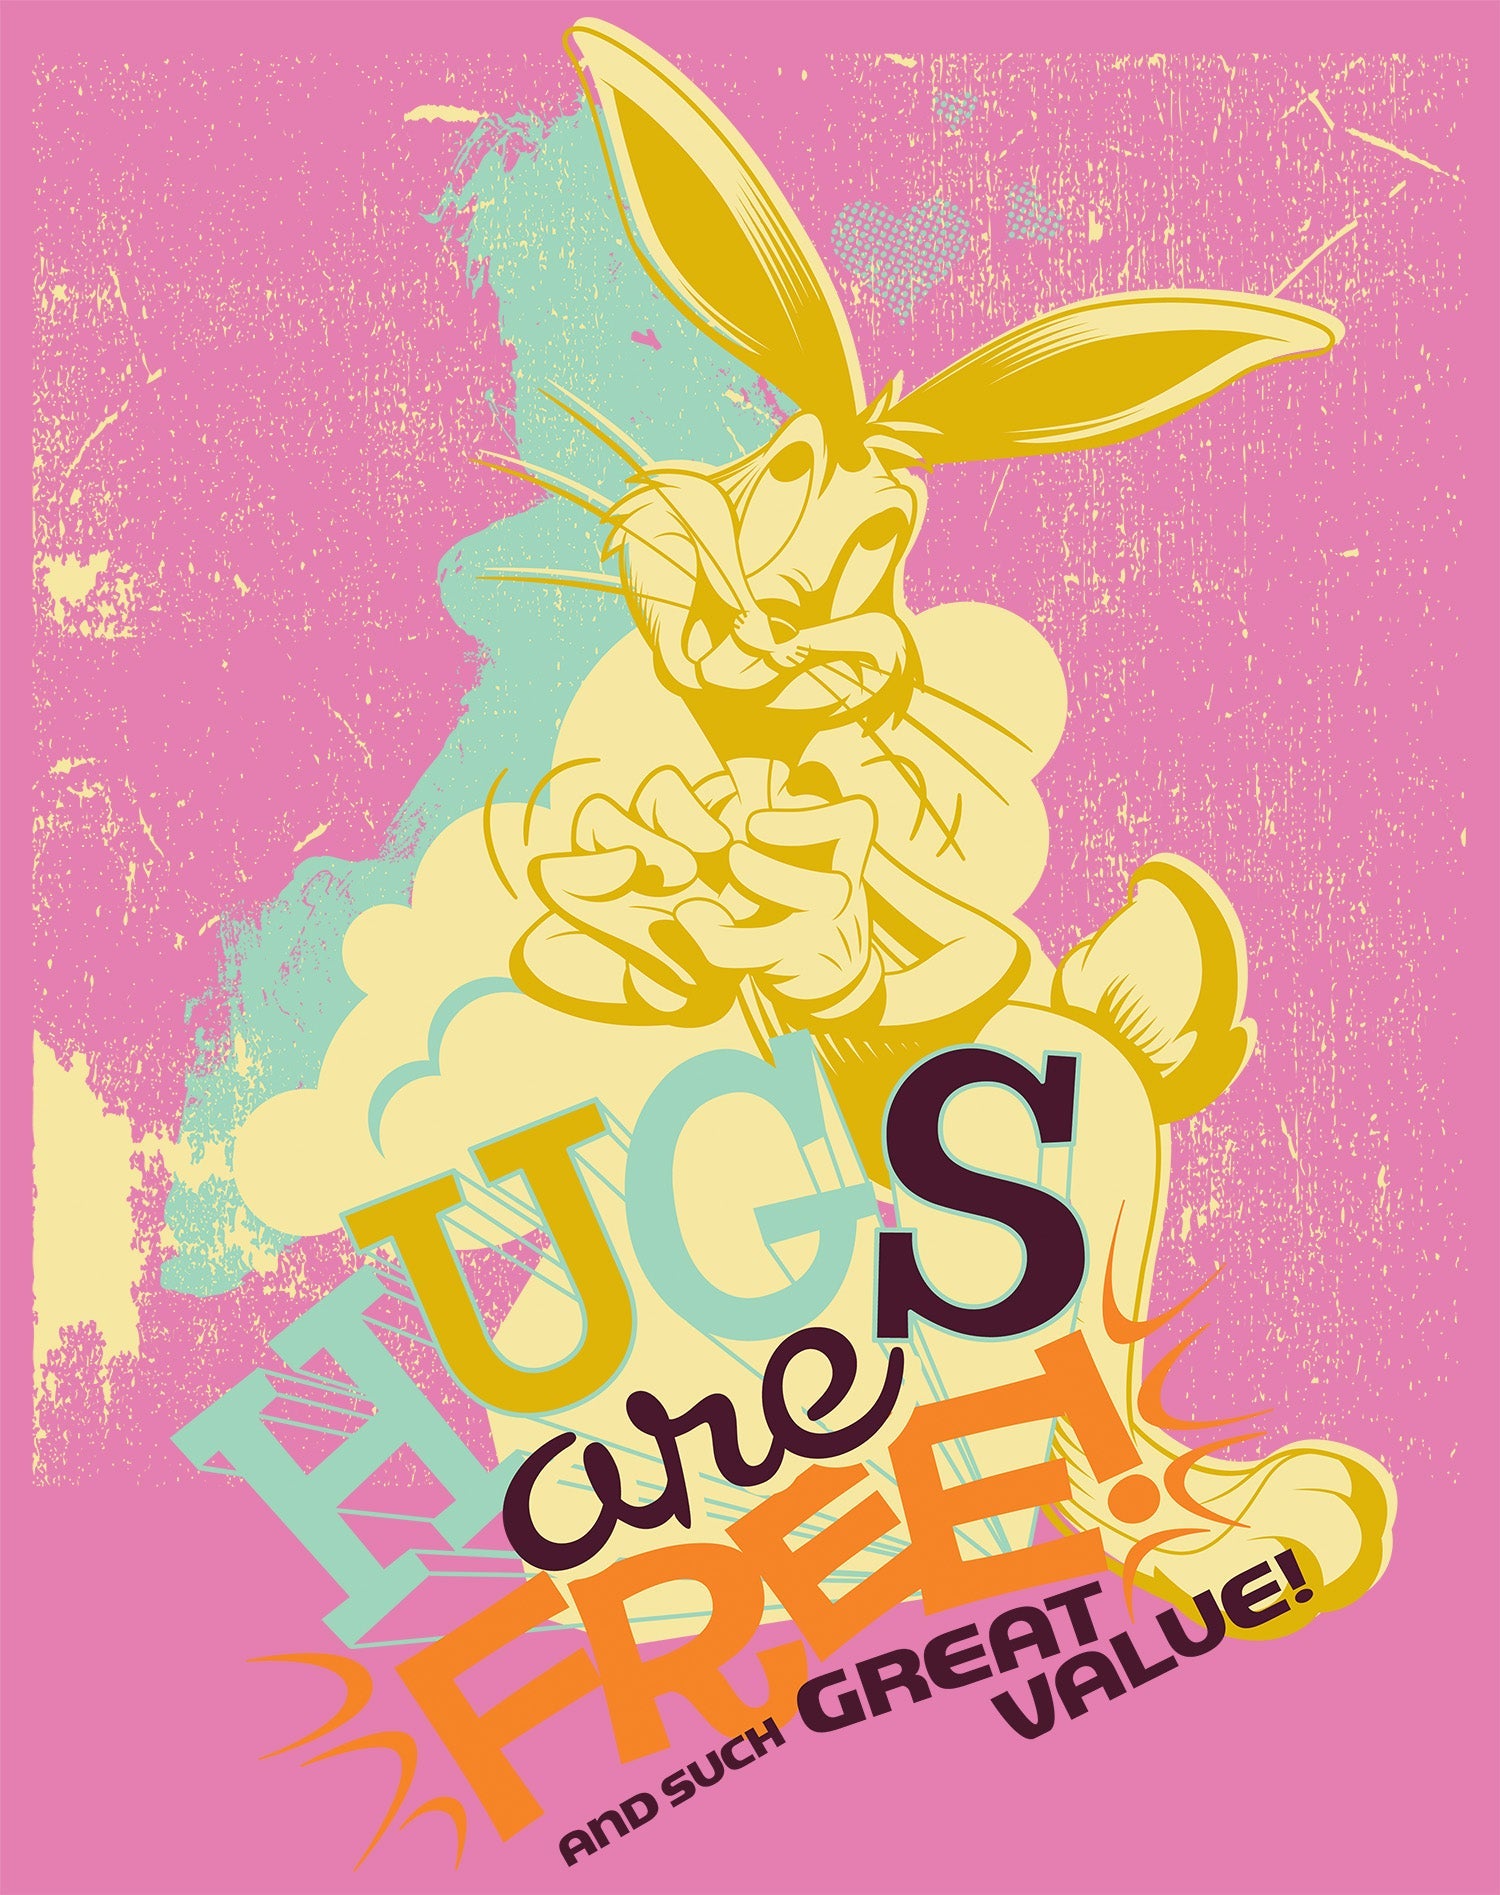 Looney Tunes Bugs Bunny Retro Hugs Free Women's T-shirt